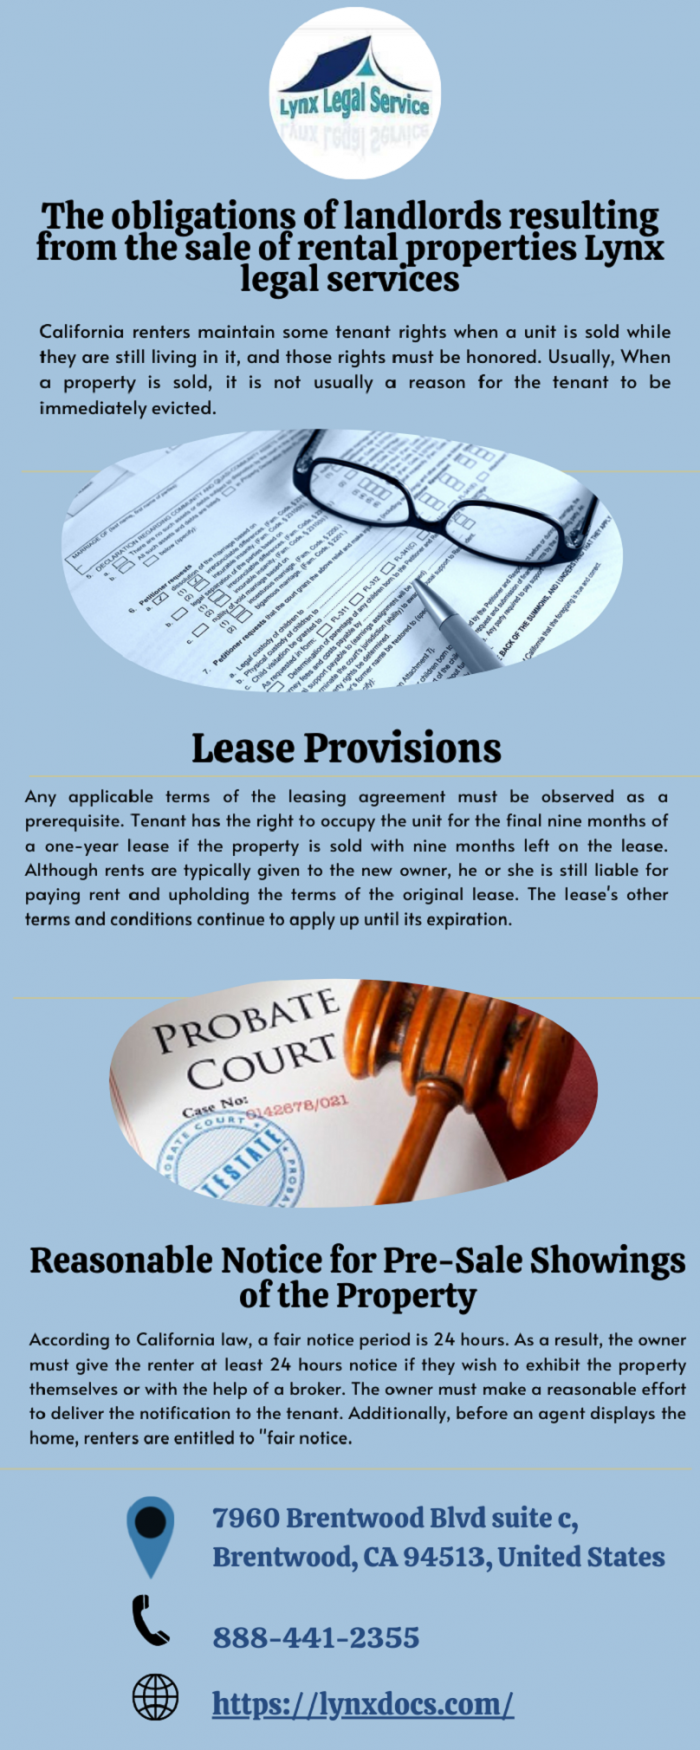 Rental Property Sales Obligations Of Landlords | Lynx legal services